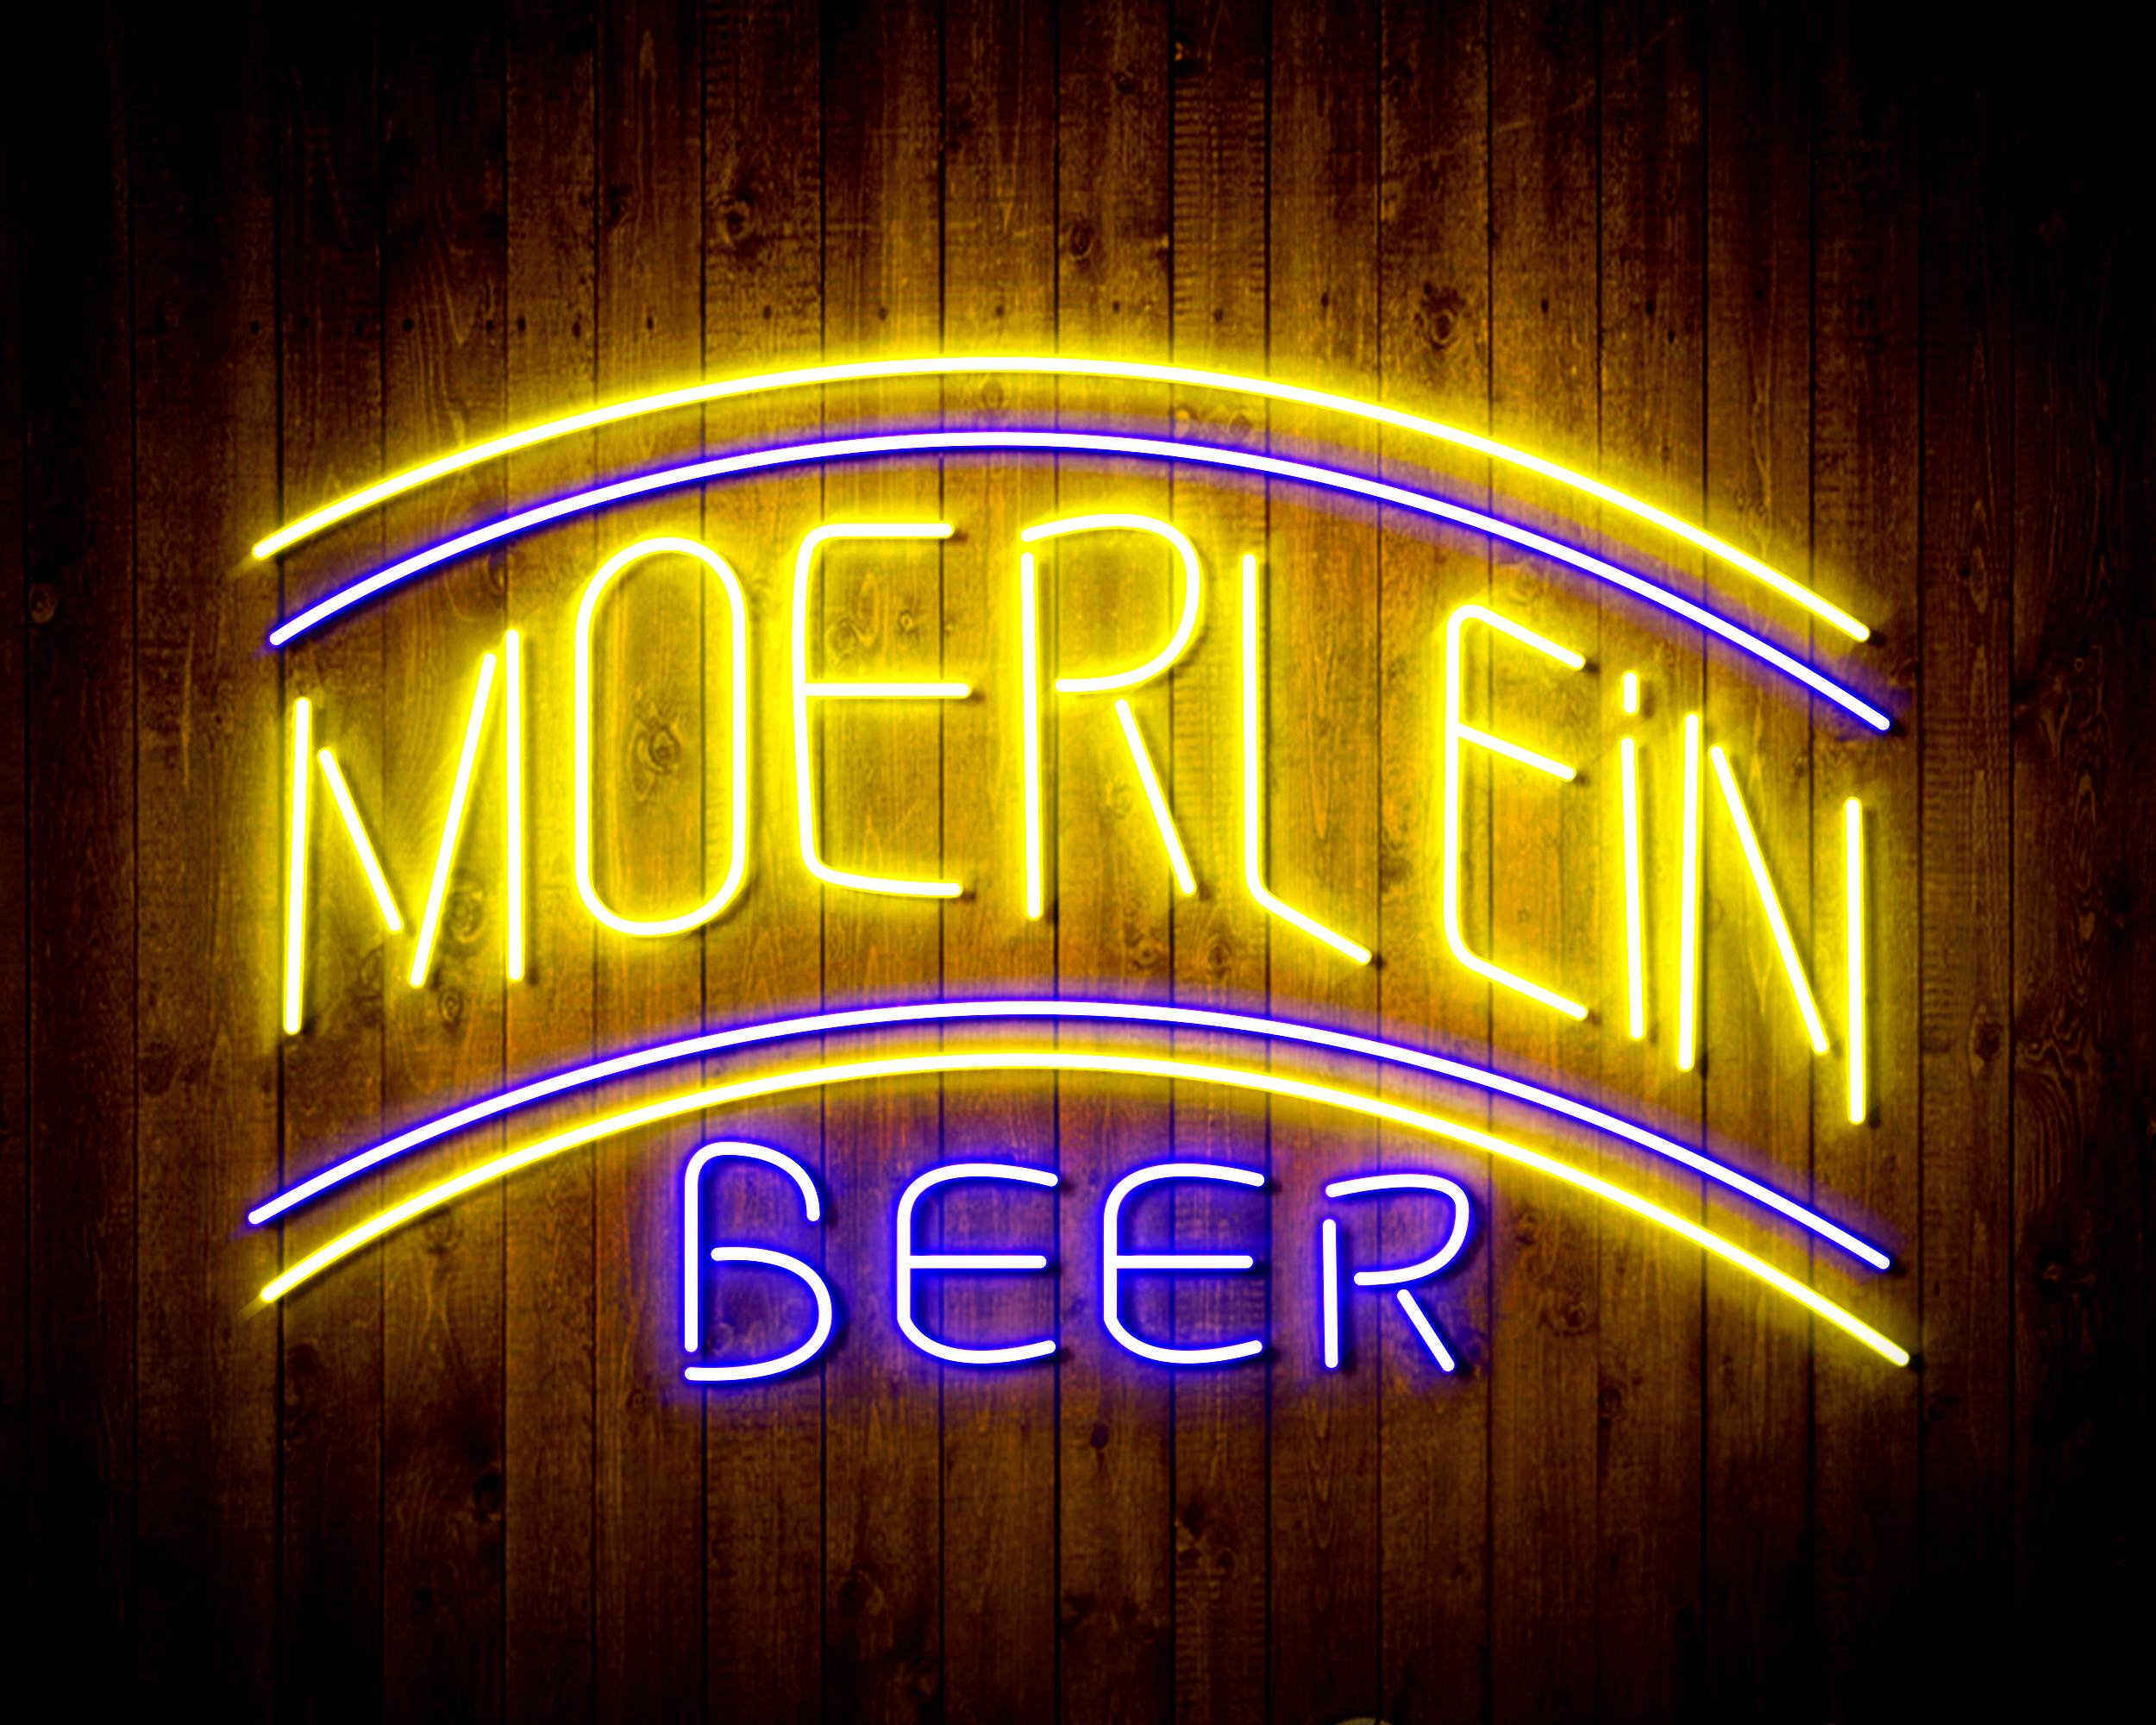 Moerlein Beer Bar Neon LED Sign